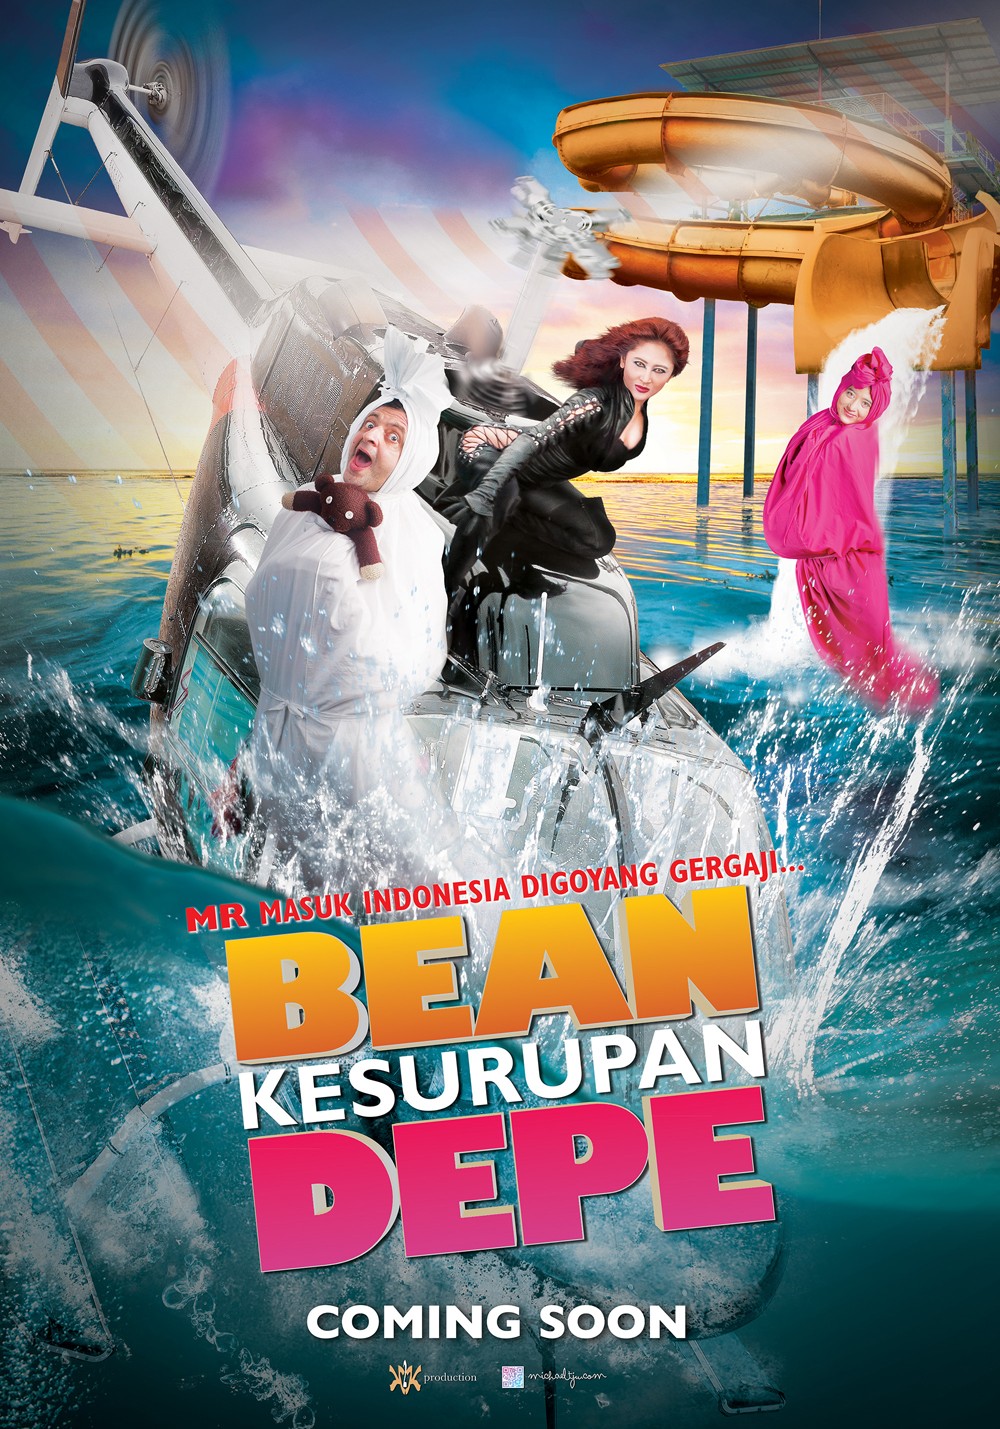 Extra Large Movie Poster Image for Mr. Bean Kesurupan Depe 